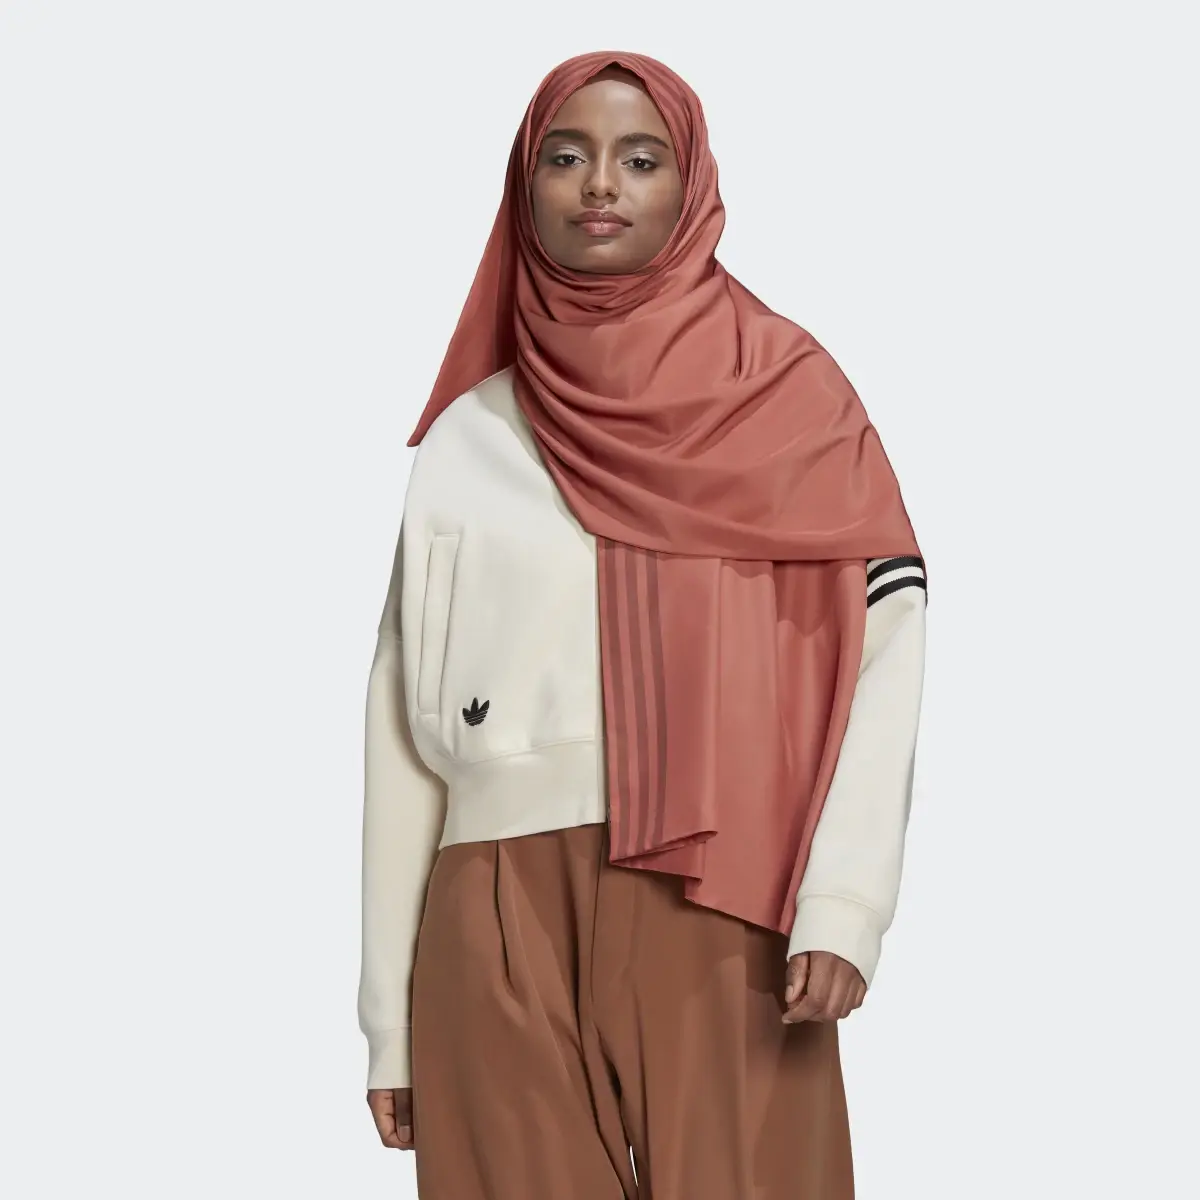 Adidas Hijab. 2